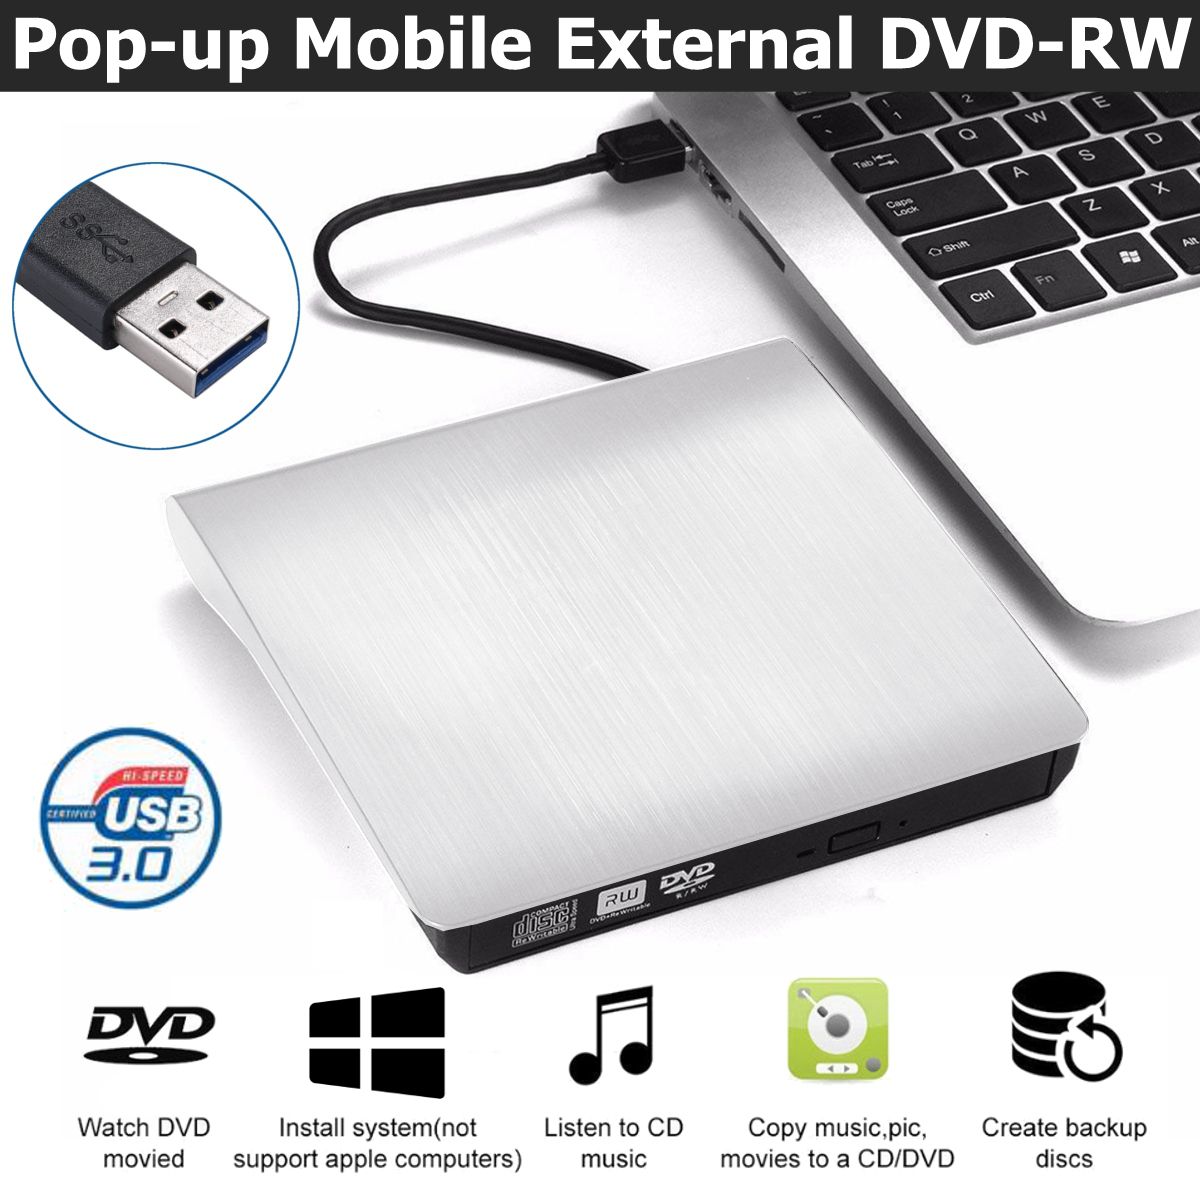 USB-30-Slim-External-DVD-Optical-Drive-DVD-RW-CD-RW-Combo-Drive-Burner-Reader-Player-1564087